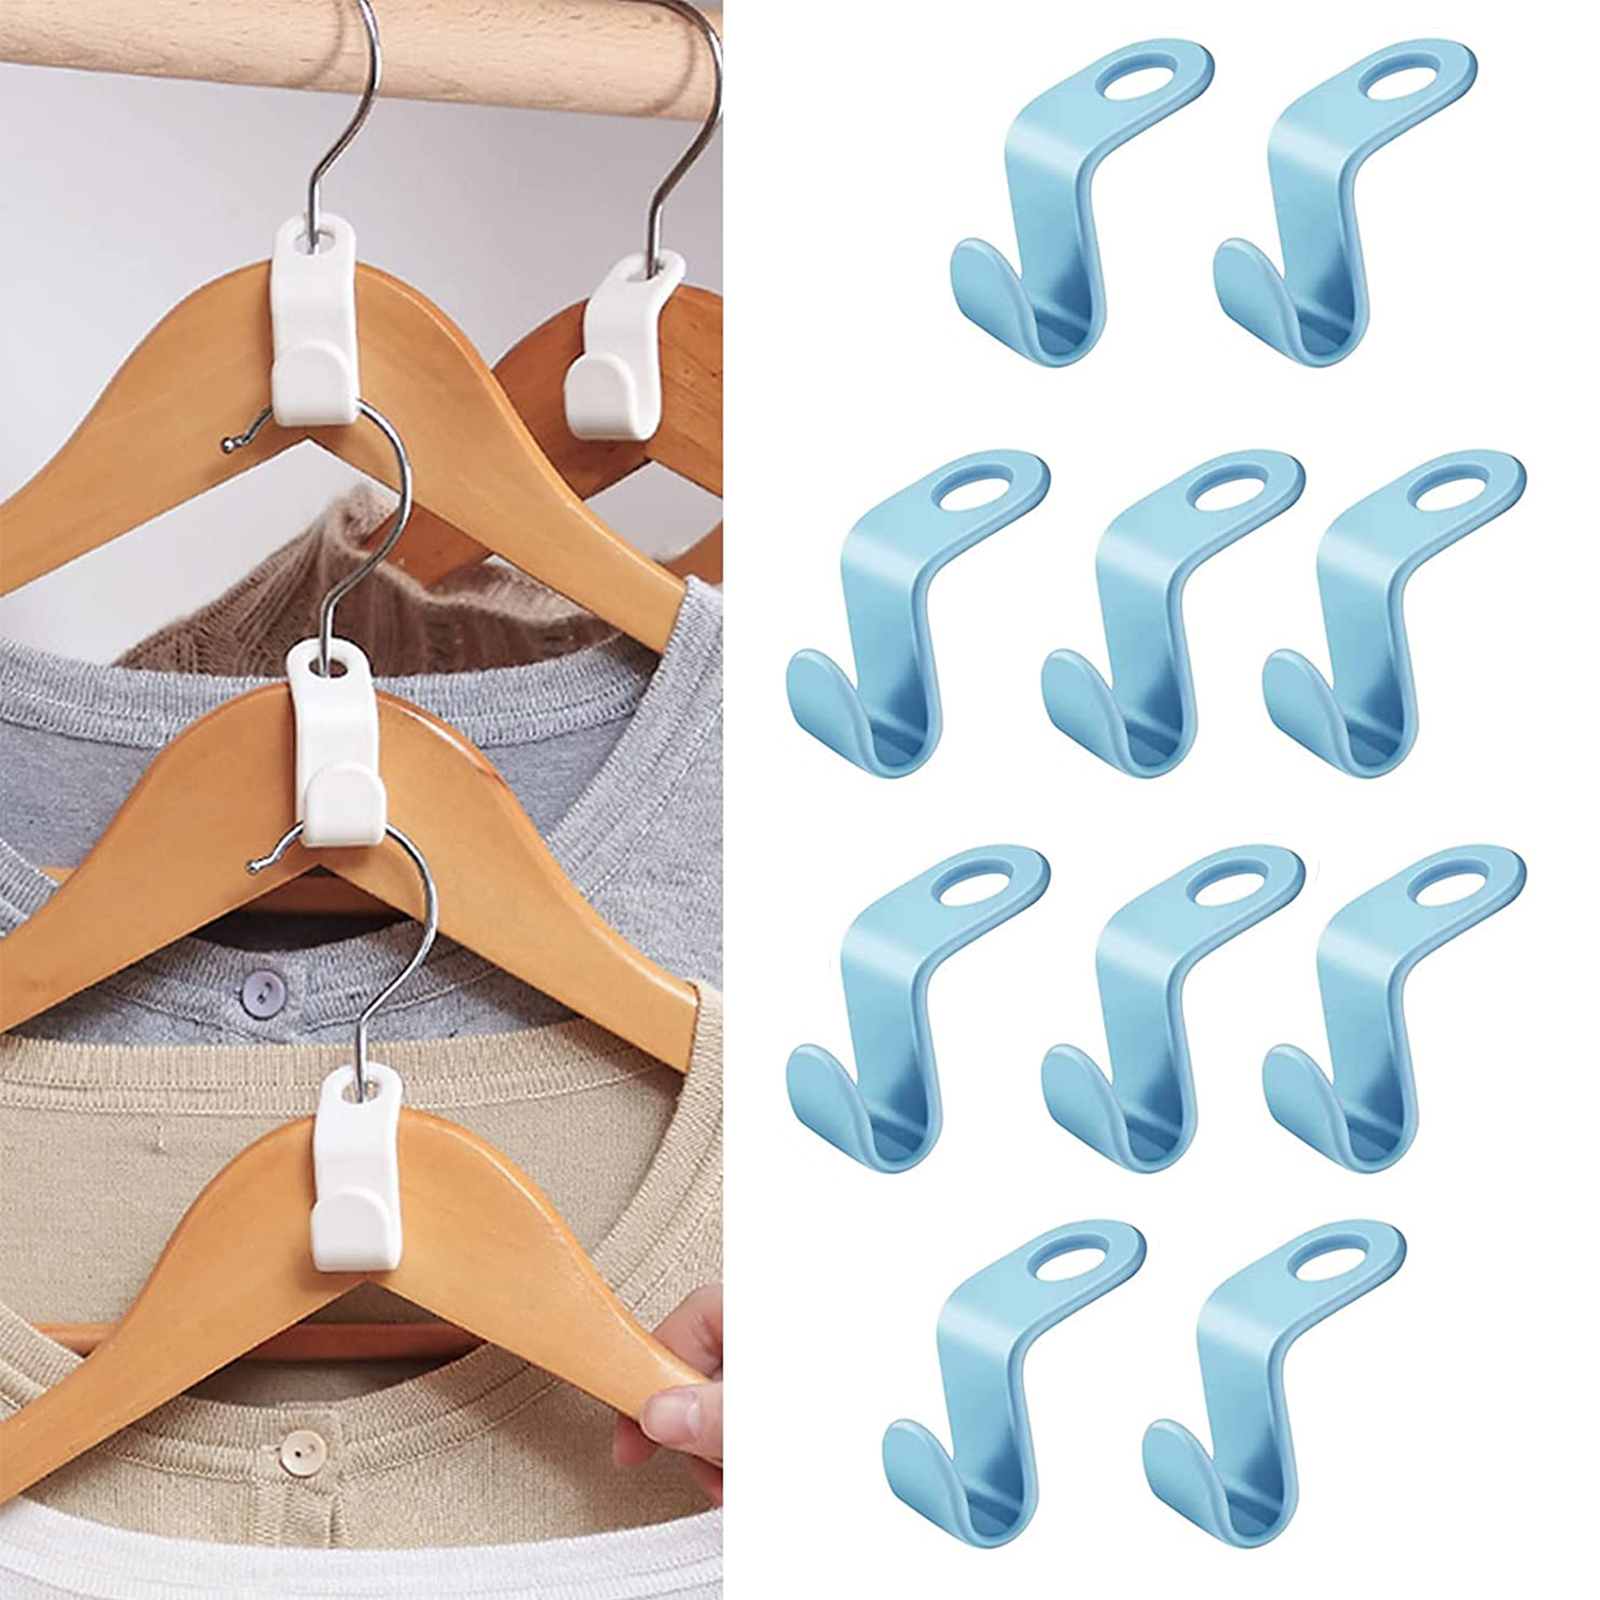  30PCS Clothes Hanger Connector Hooks, Hanger Extender